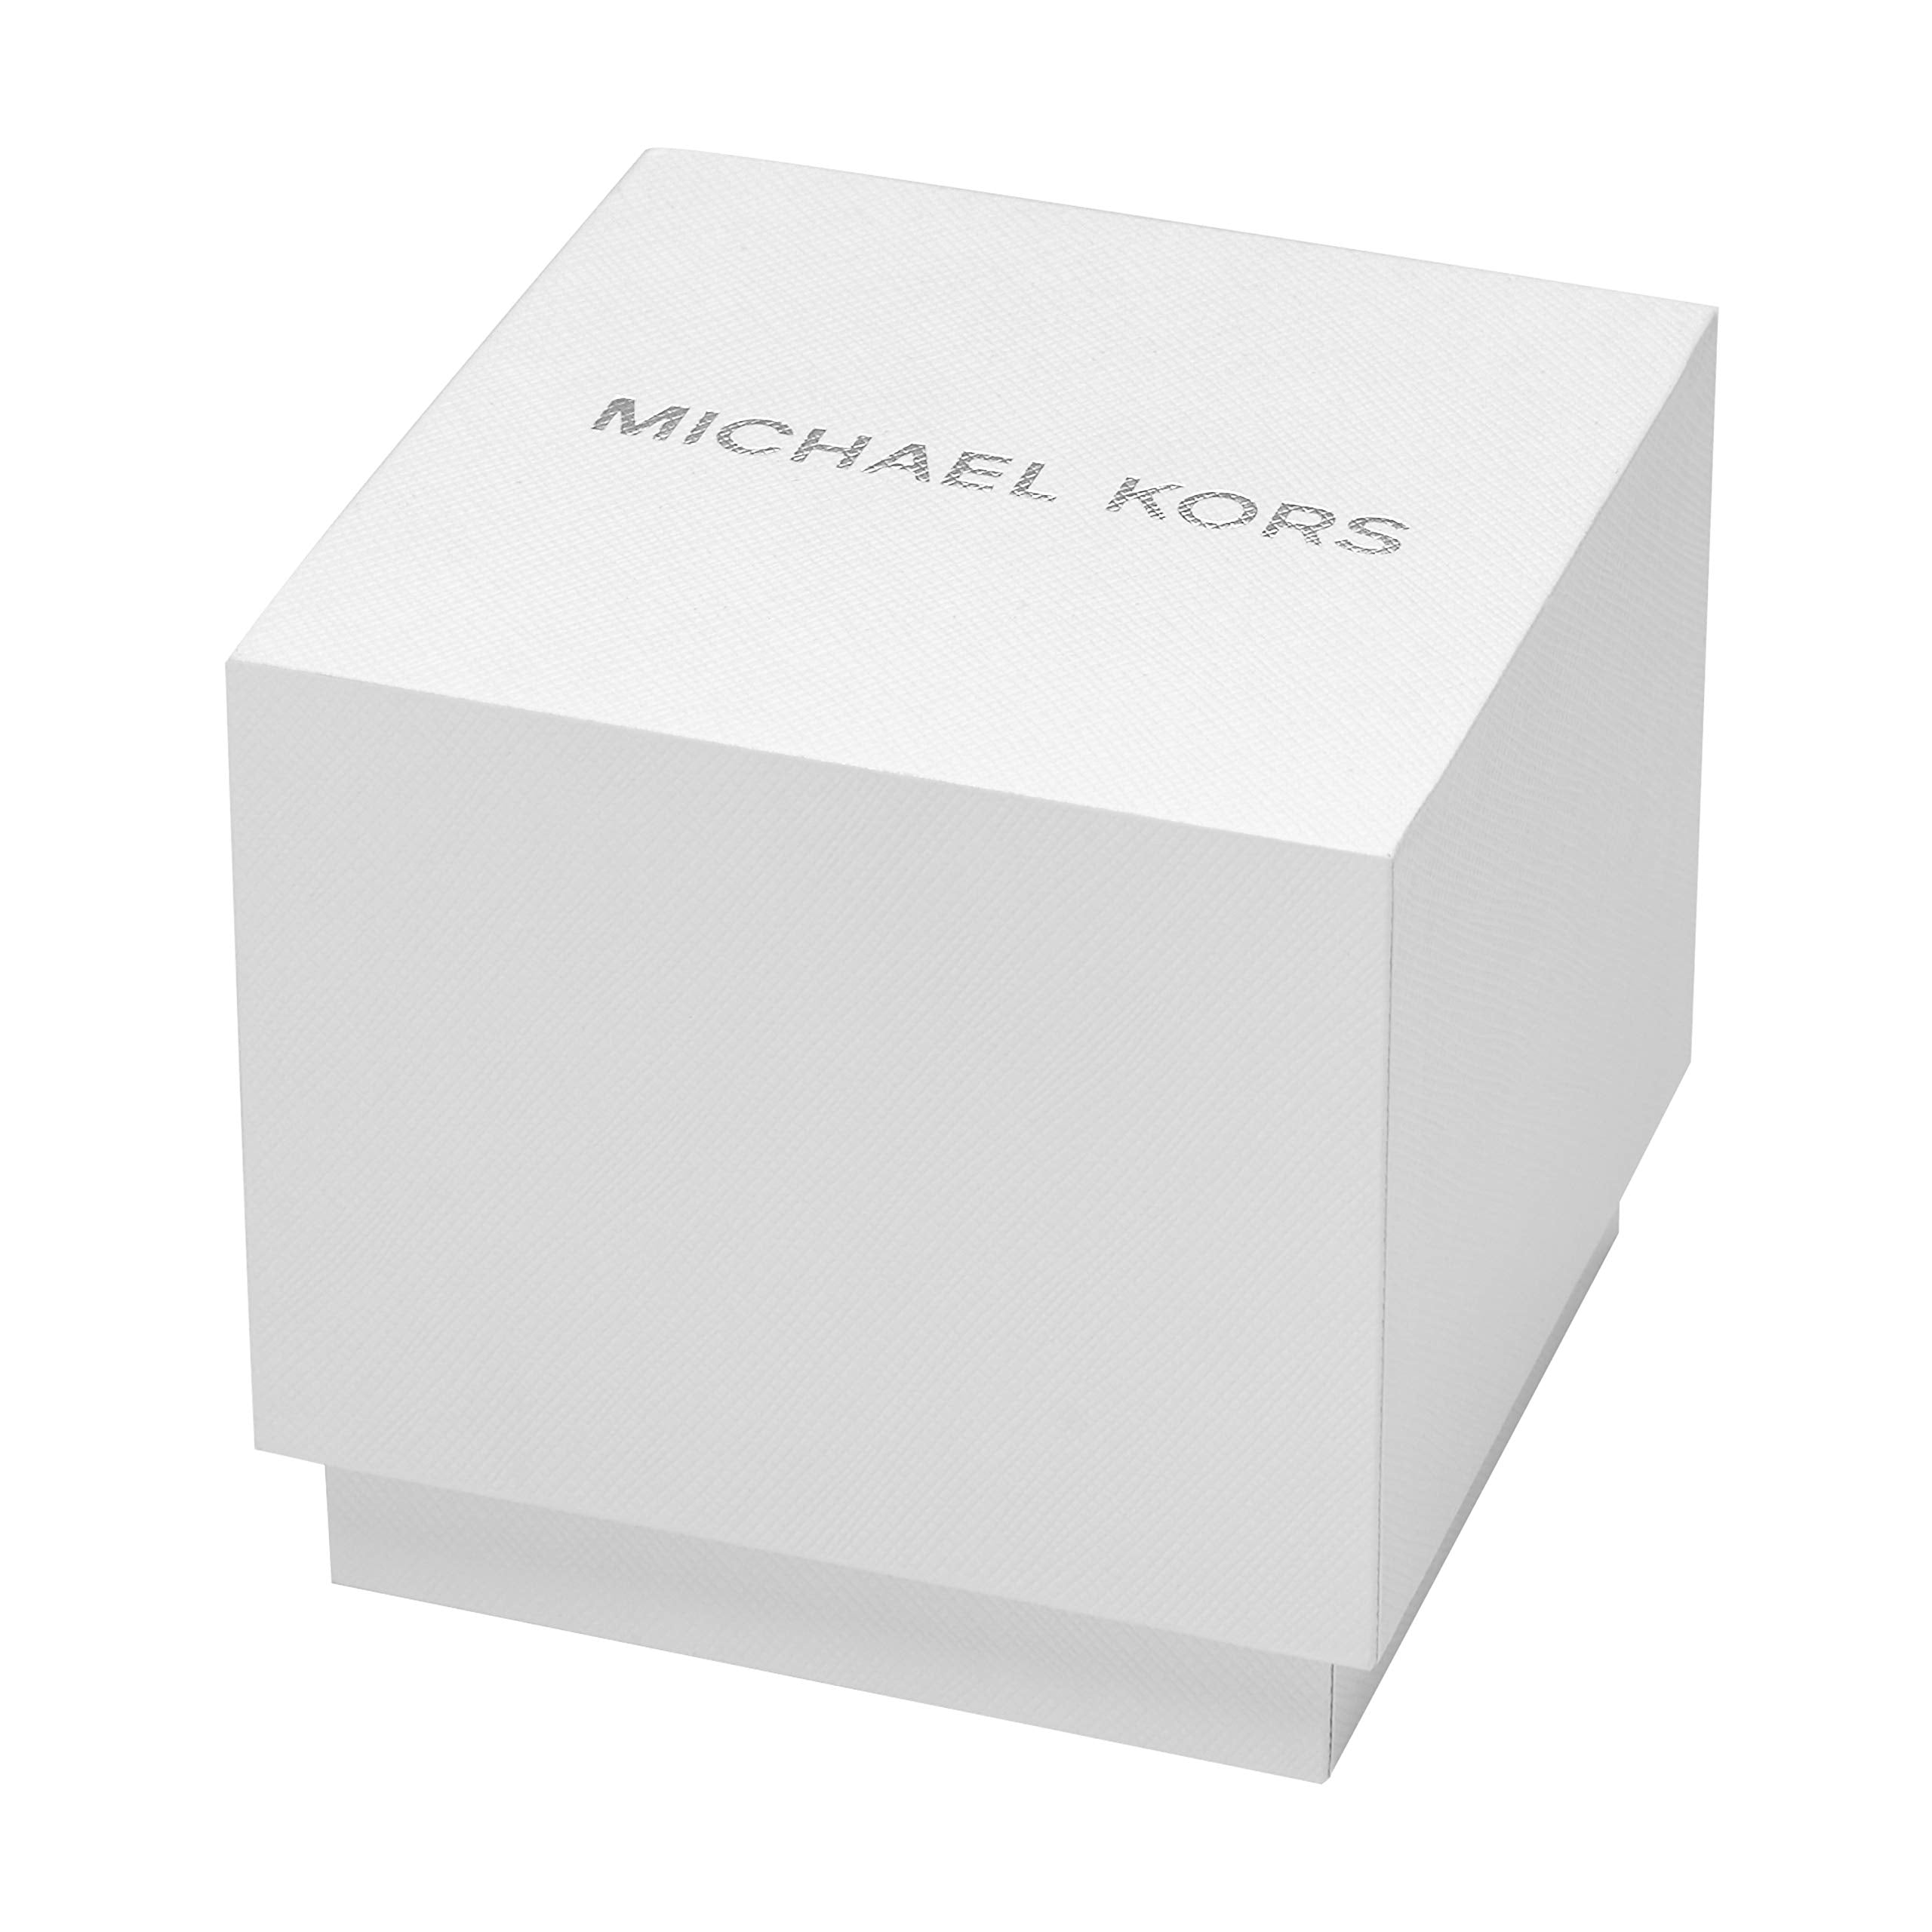 Michael Kors Pyper Three-Hand Zebra-Print Leather Strap